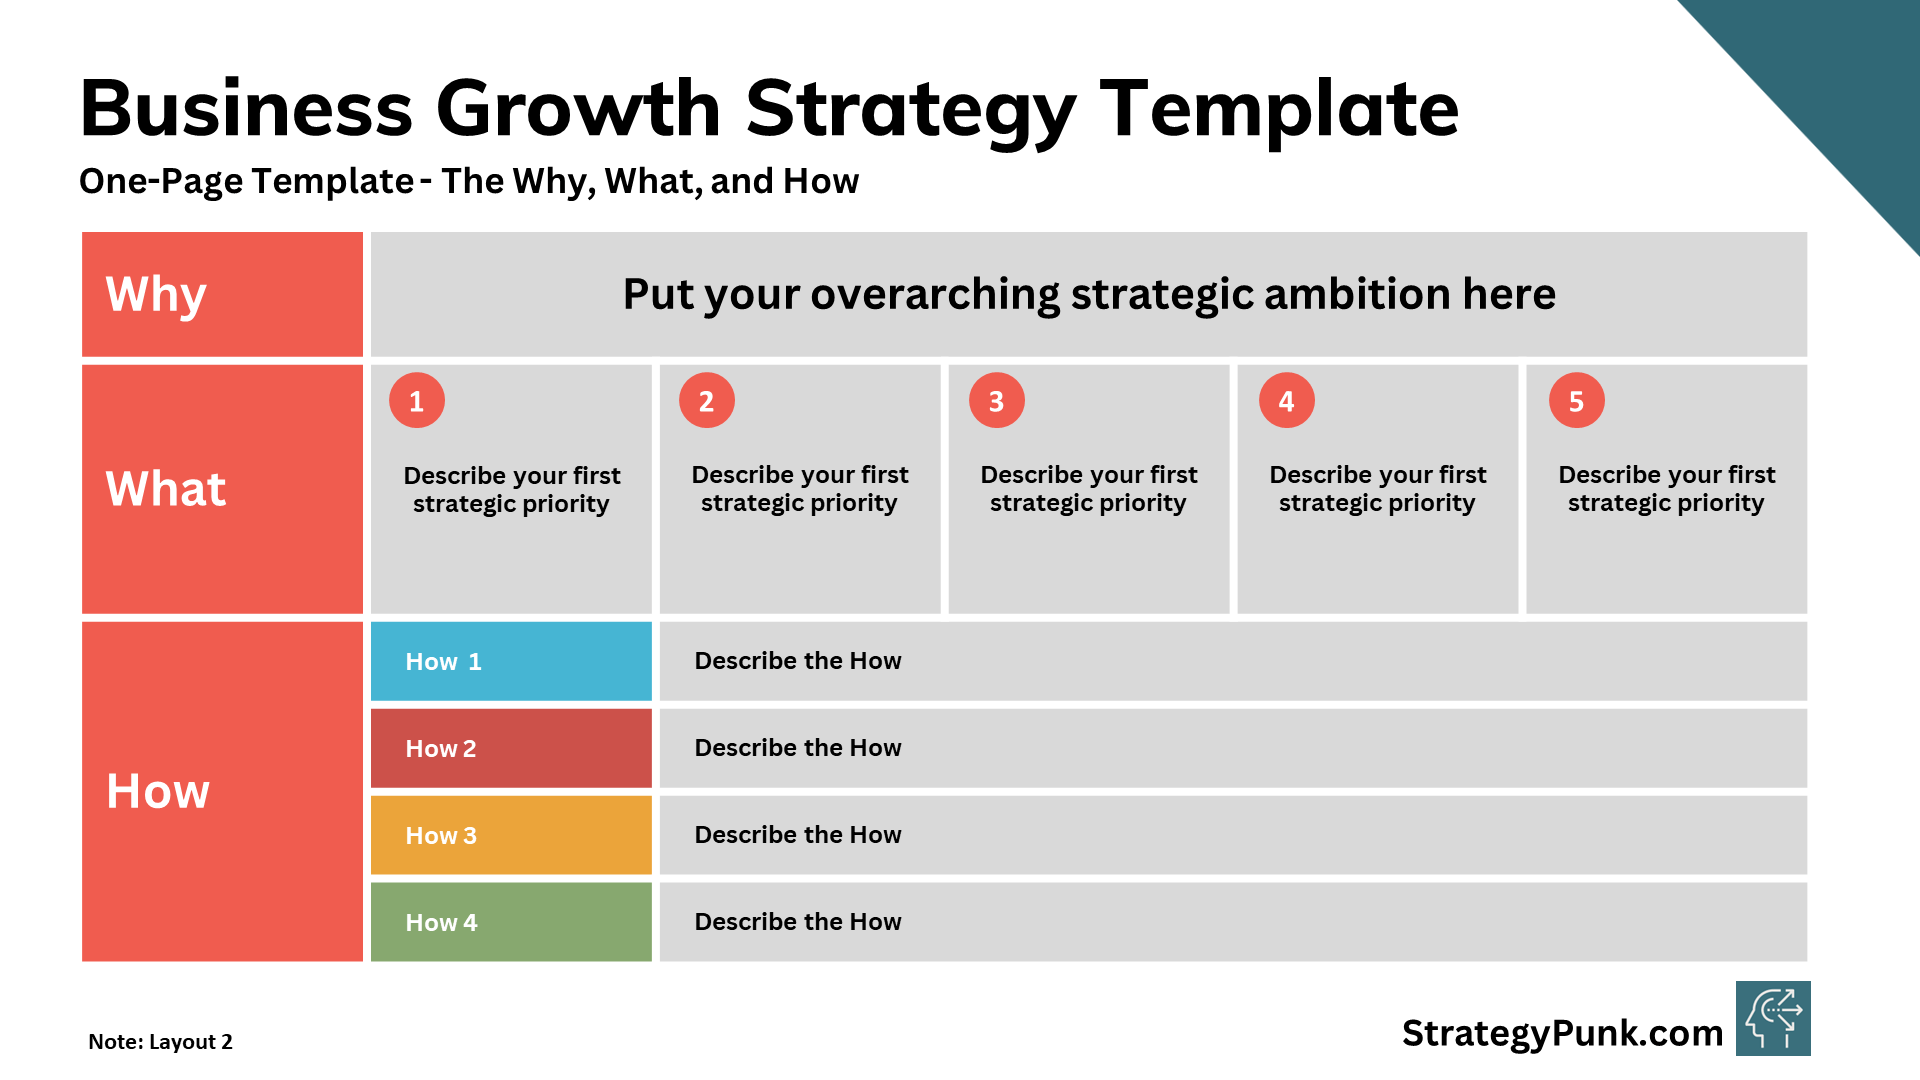 company growth presentation